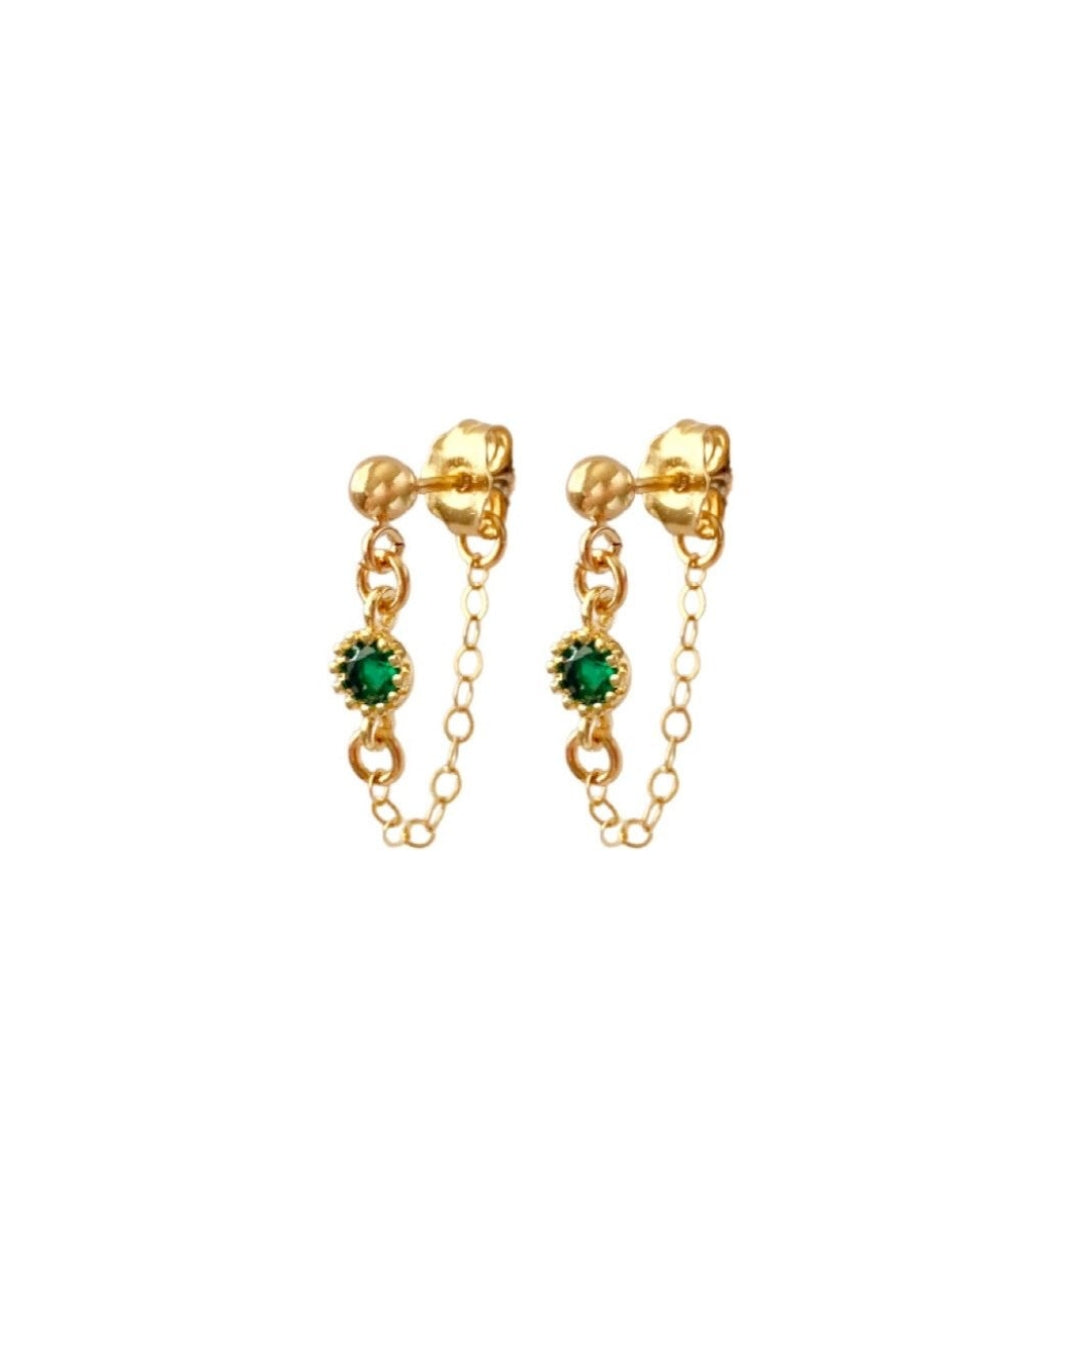 14k gold fill envy chain studs earrings in green emerald cubic zirconia crystal